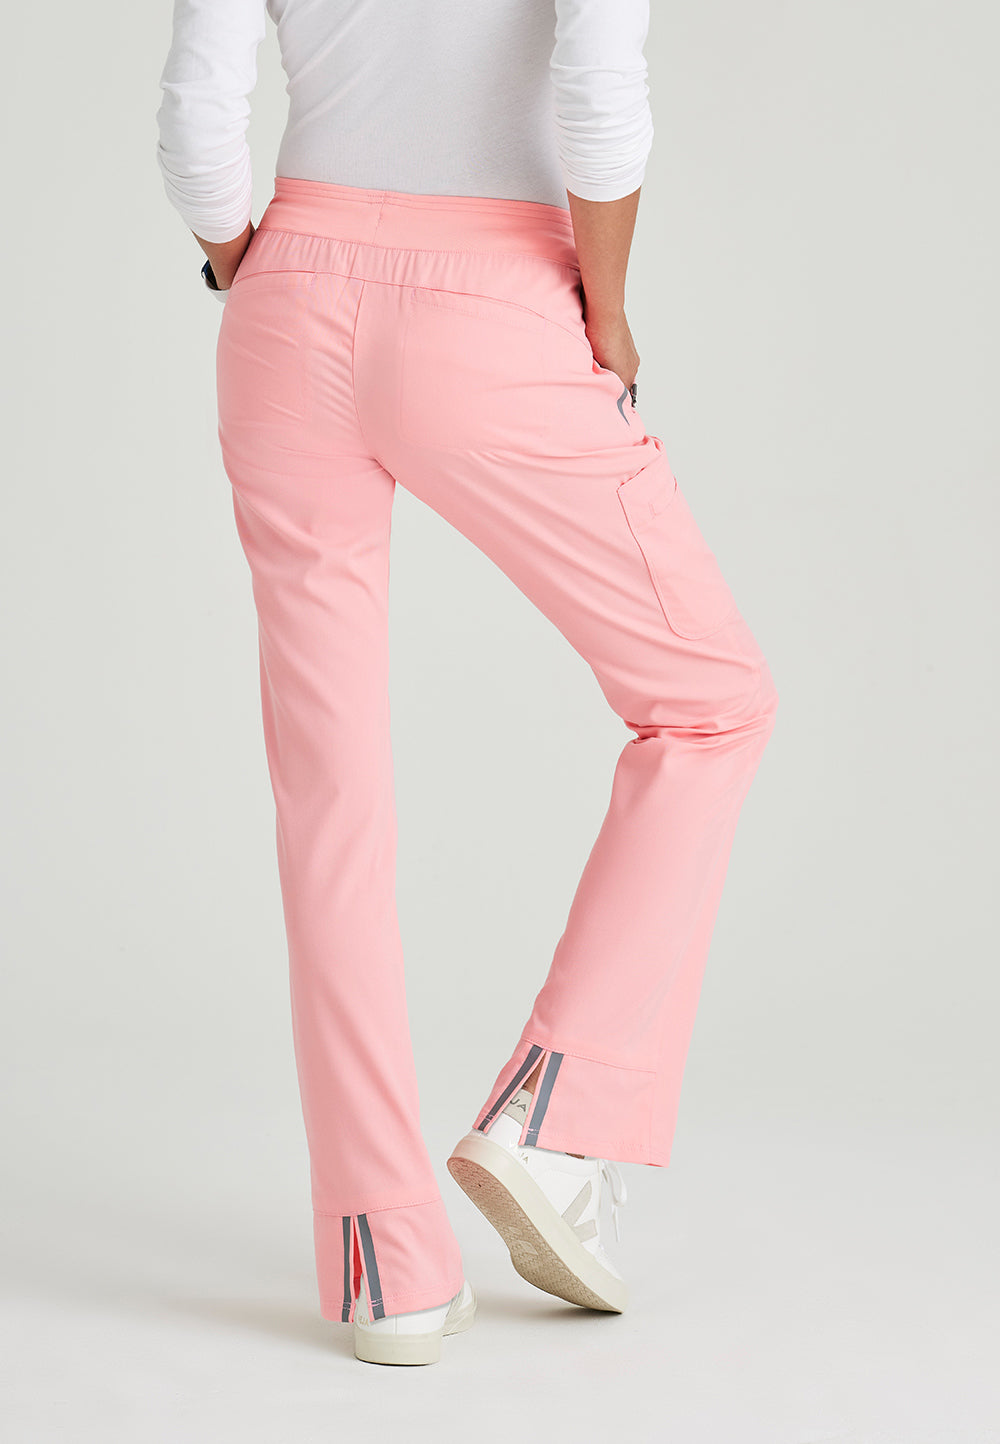 Pantalon de Scrub 6 poches Grey's Anatomy Impact Elevate Pant #7228 Rosy Coral arrière